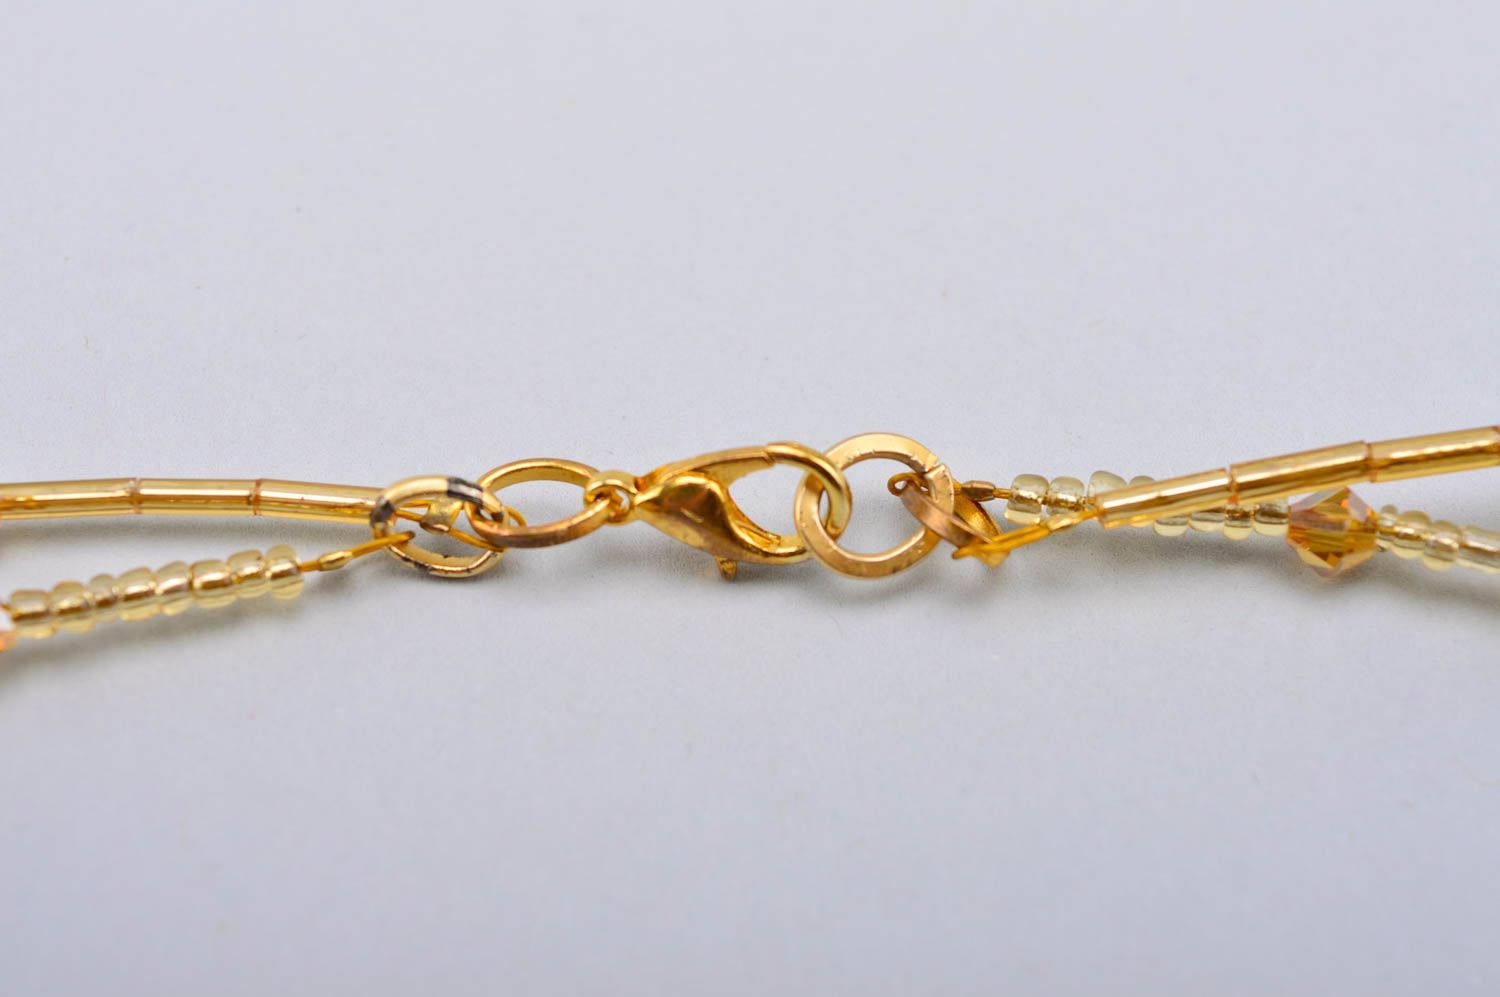 Unusual handmade beaded necklace design artisan jewelry fashion accessories photo 4